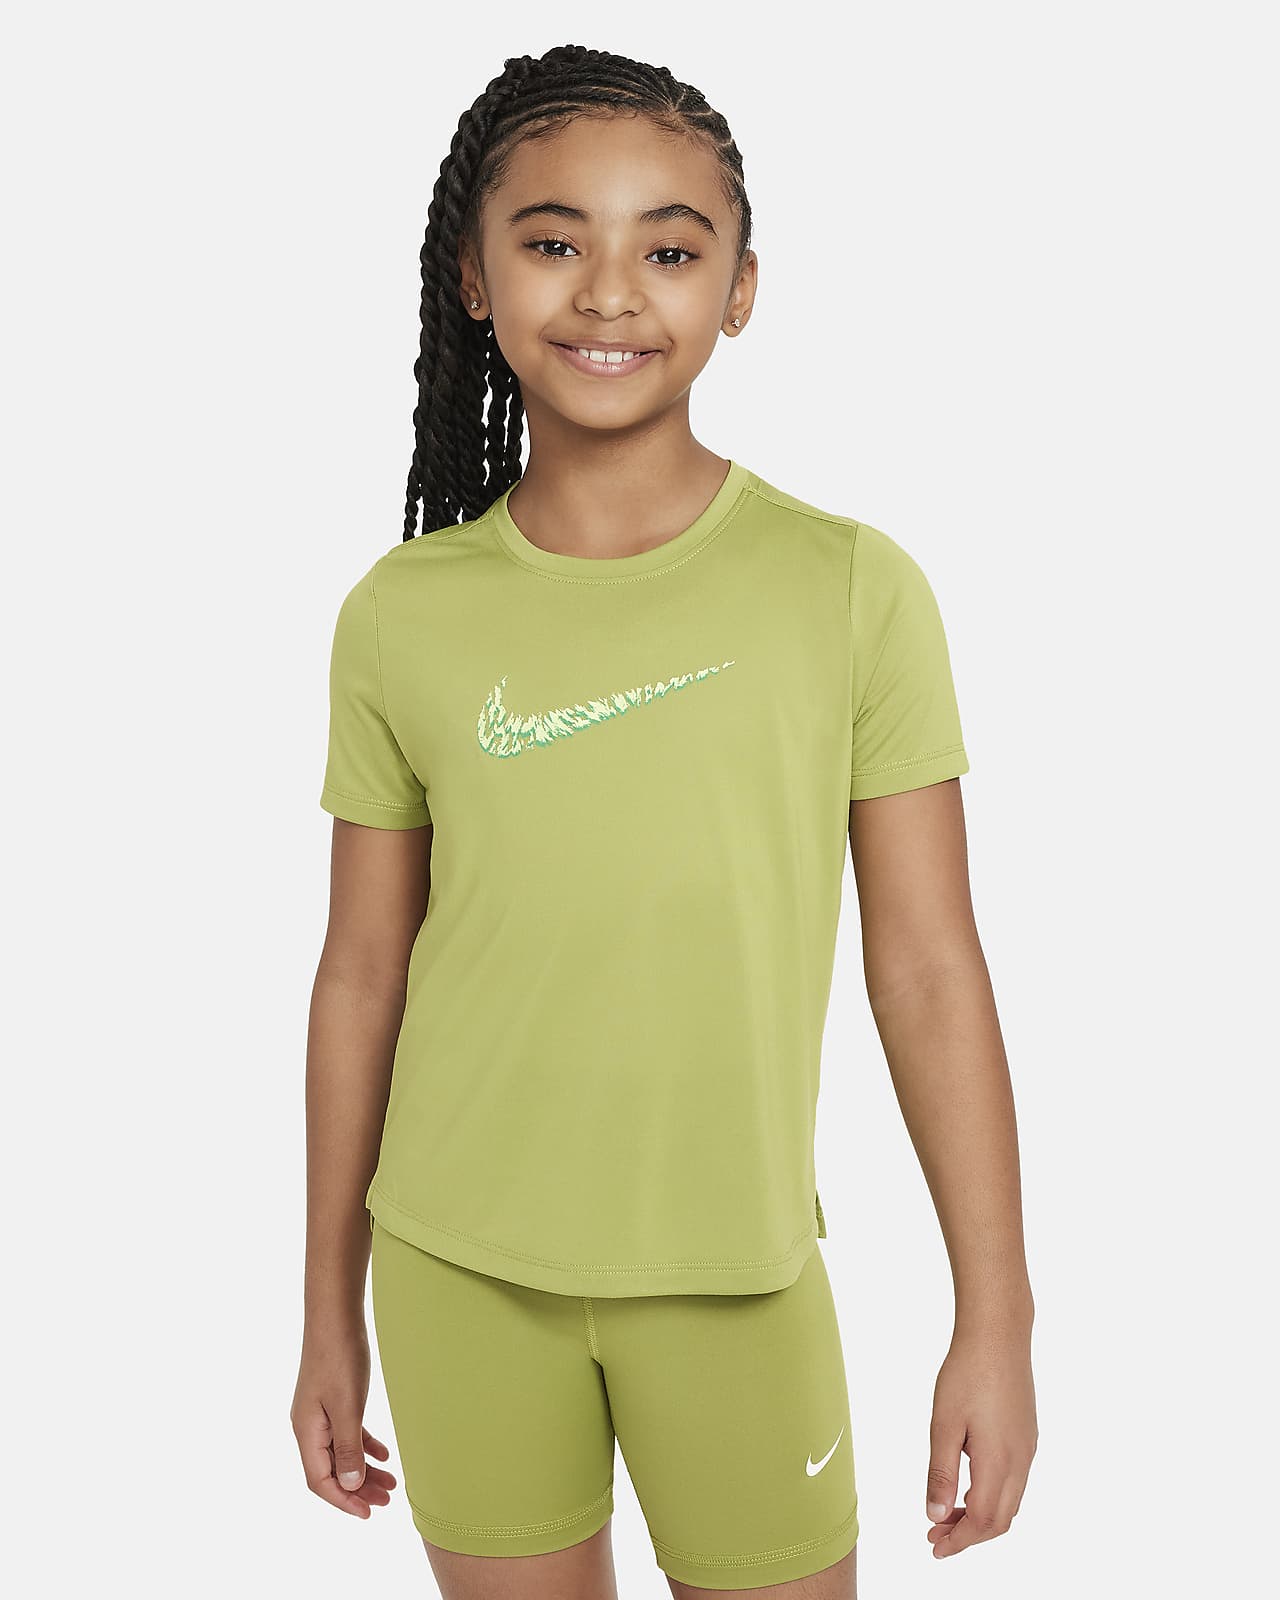 Nike One Big Kids\' (Girls\') Top. Short-Sleeve Training